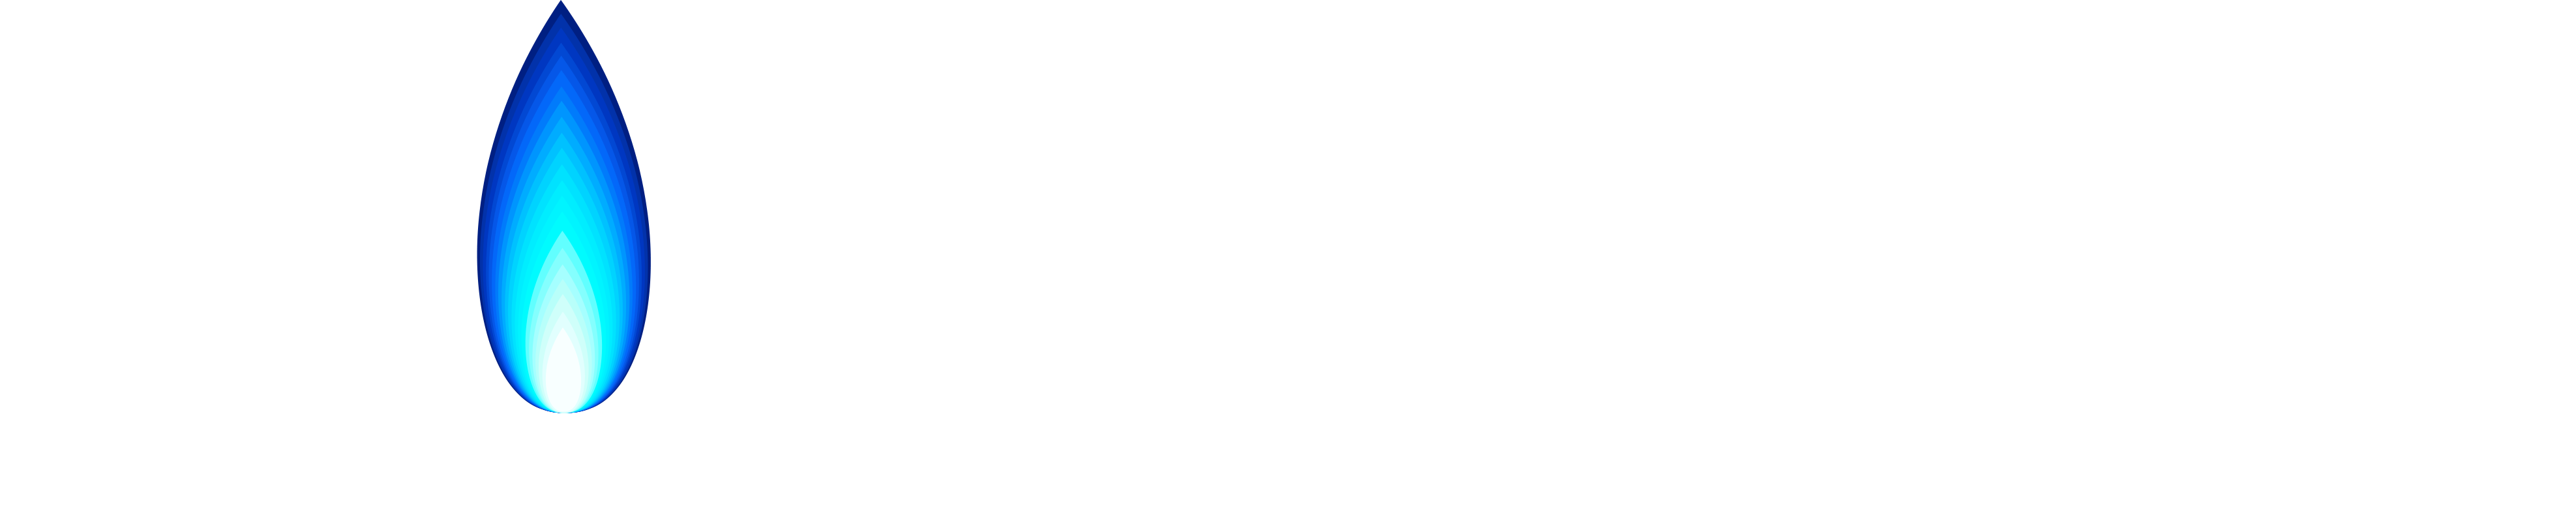 dug gas+ logo